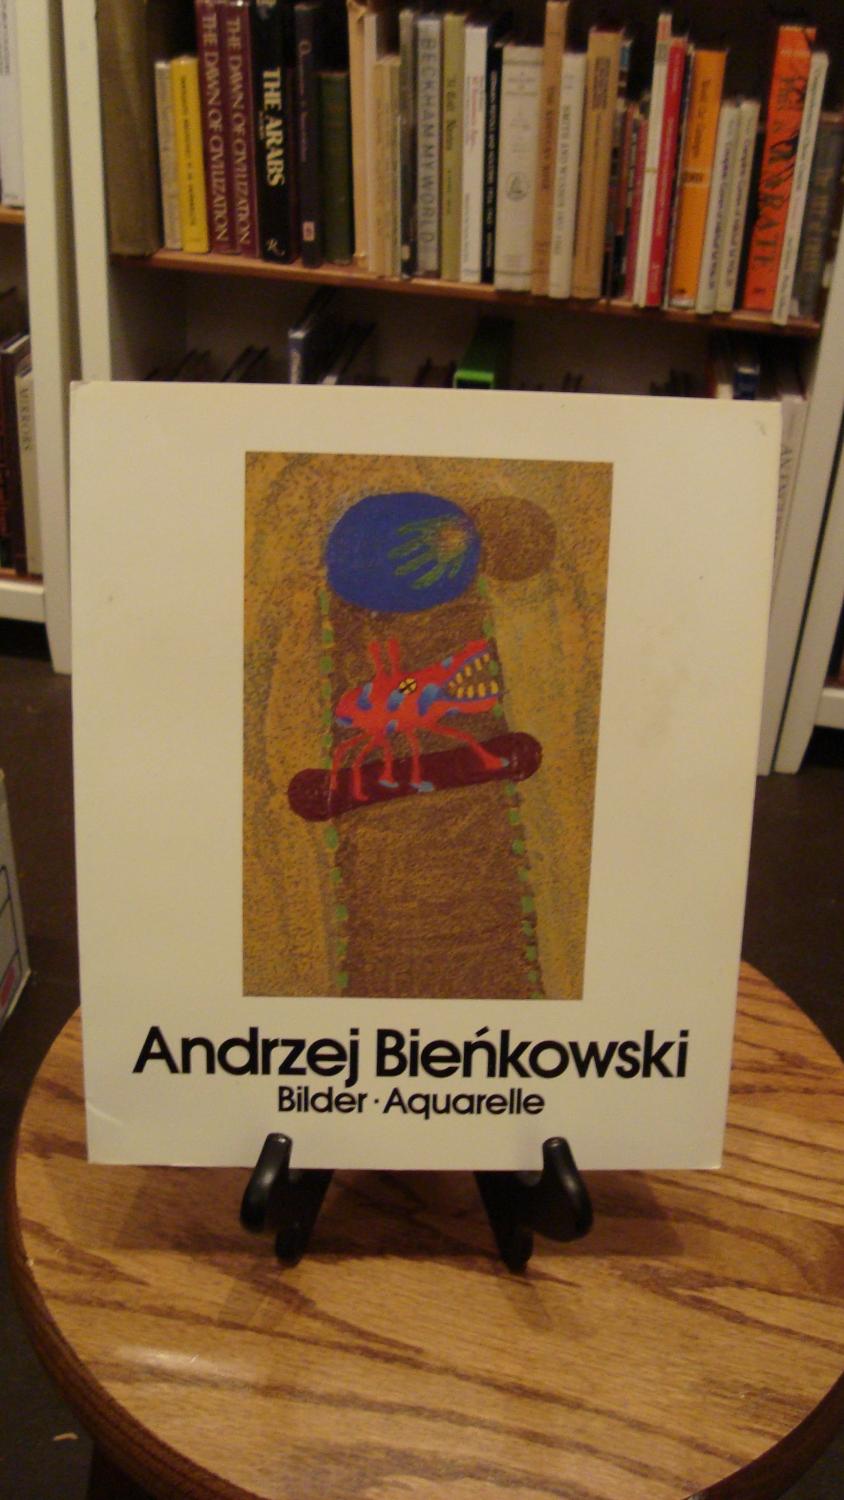 ANDRZEJ BIENKOWSKI: BILDER AQUARELLE; - Barlach, Hans & Kusak, Dr. Alexej (eds.)